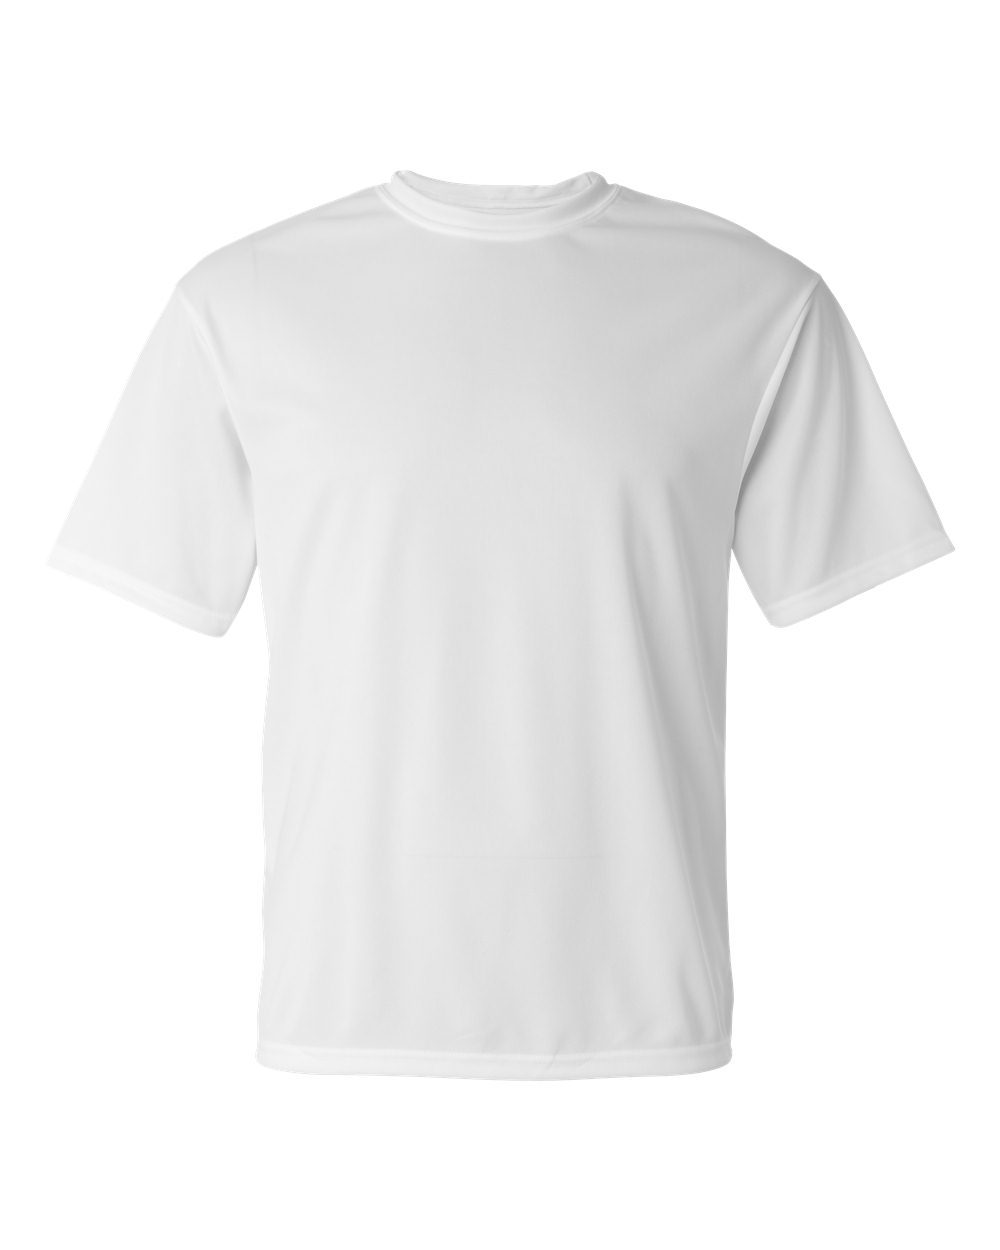 C2 Sport 5100 Performance Shirt :: White, Size L